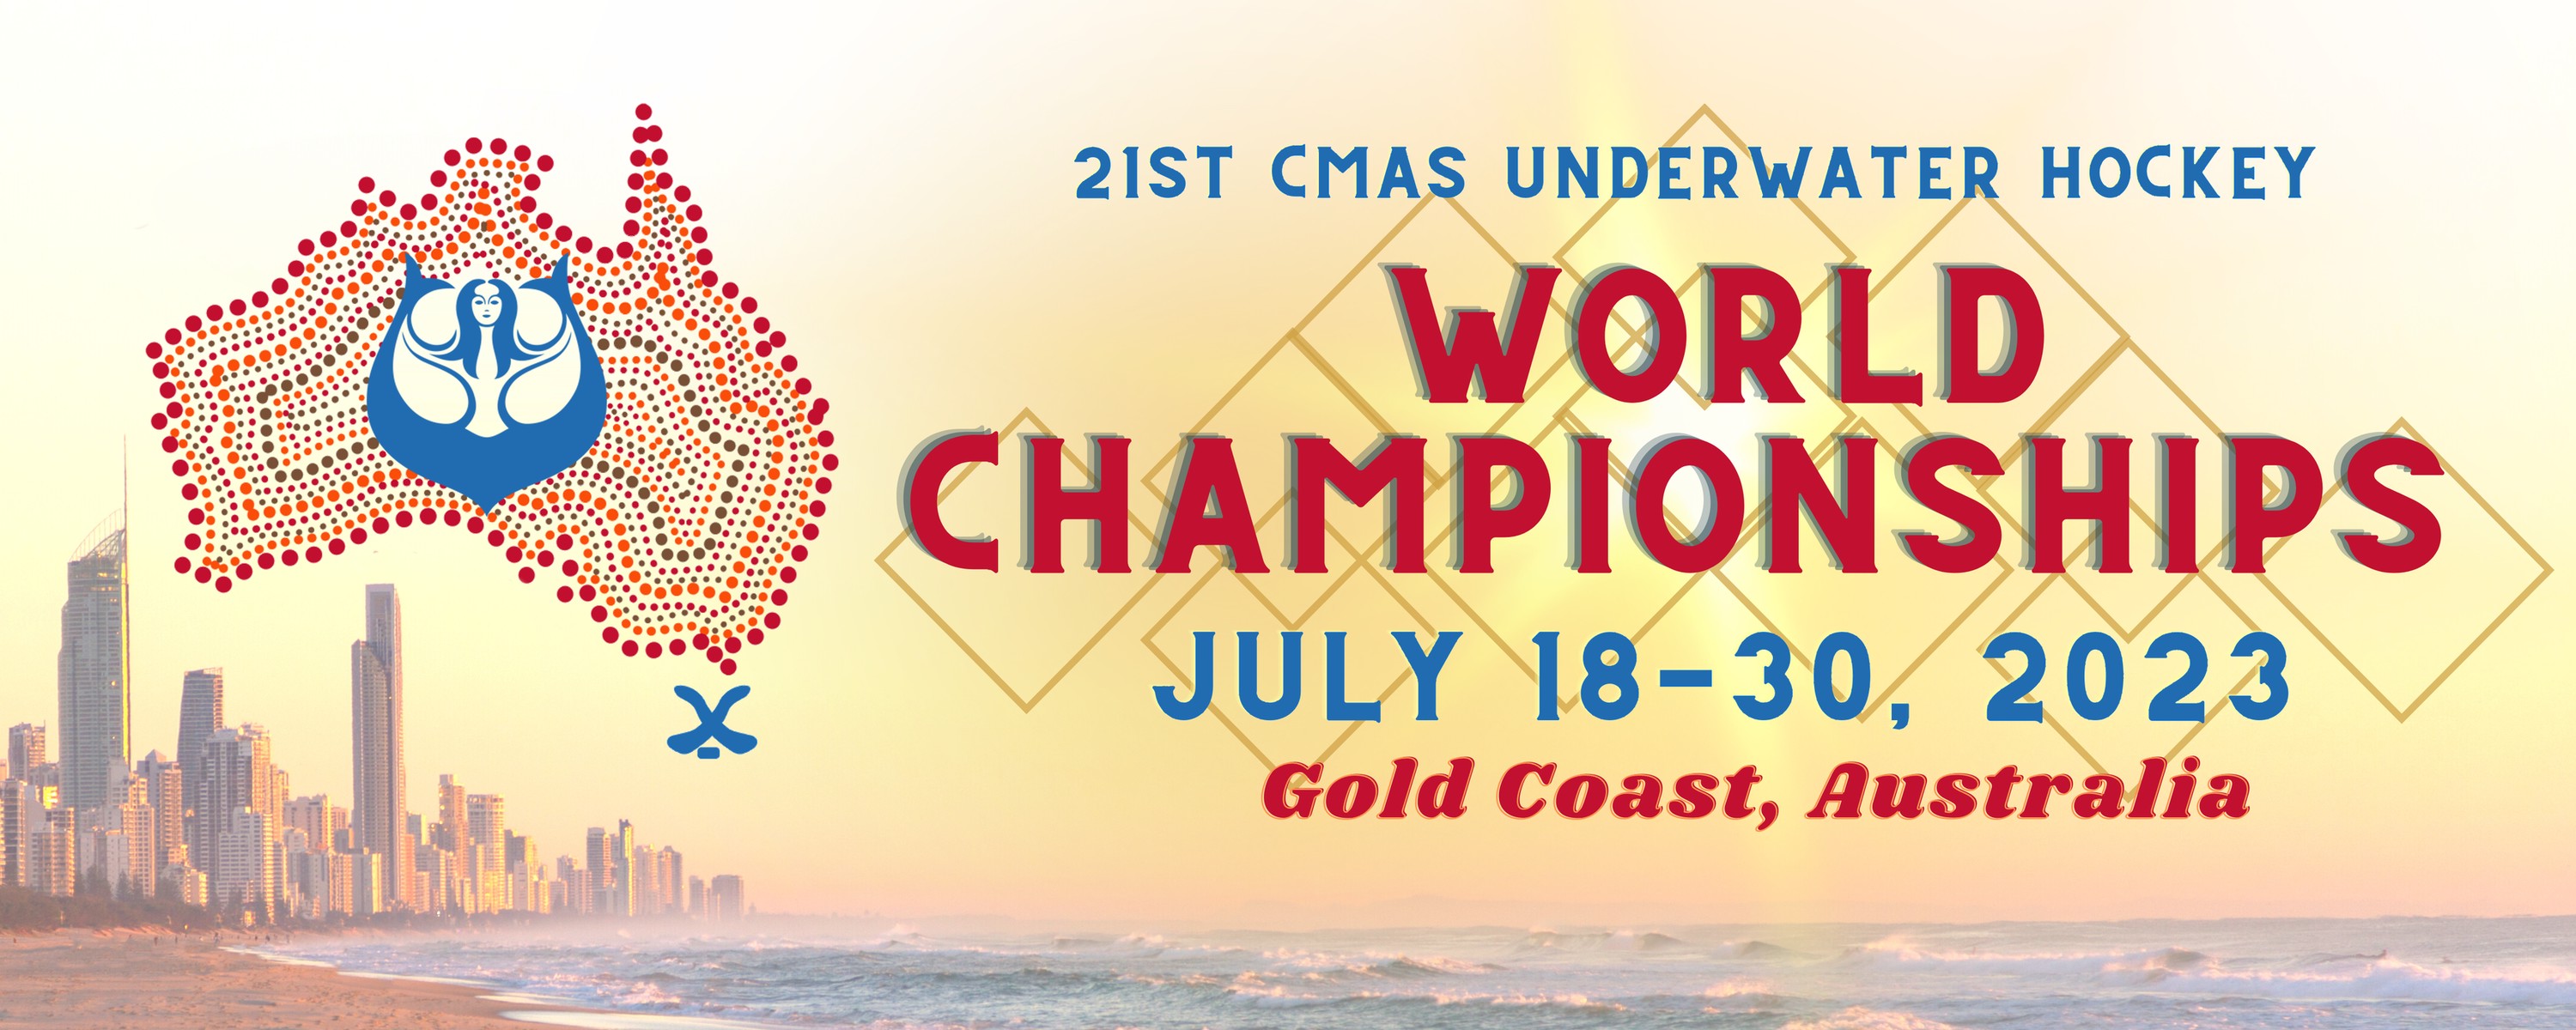 21st CMAS UWH World Championships Banner